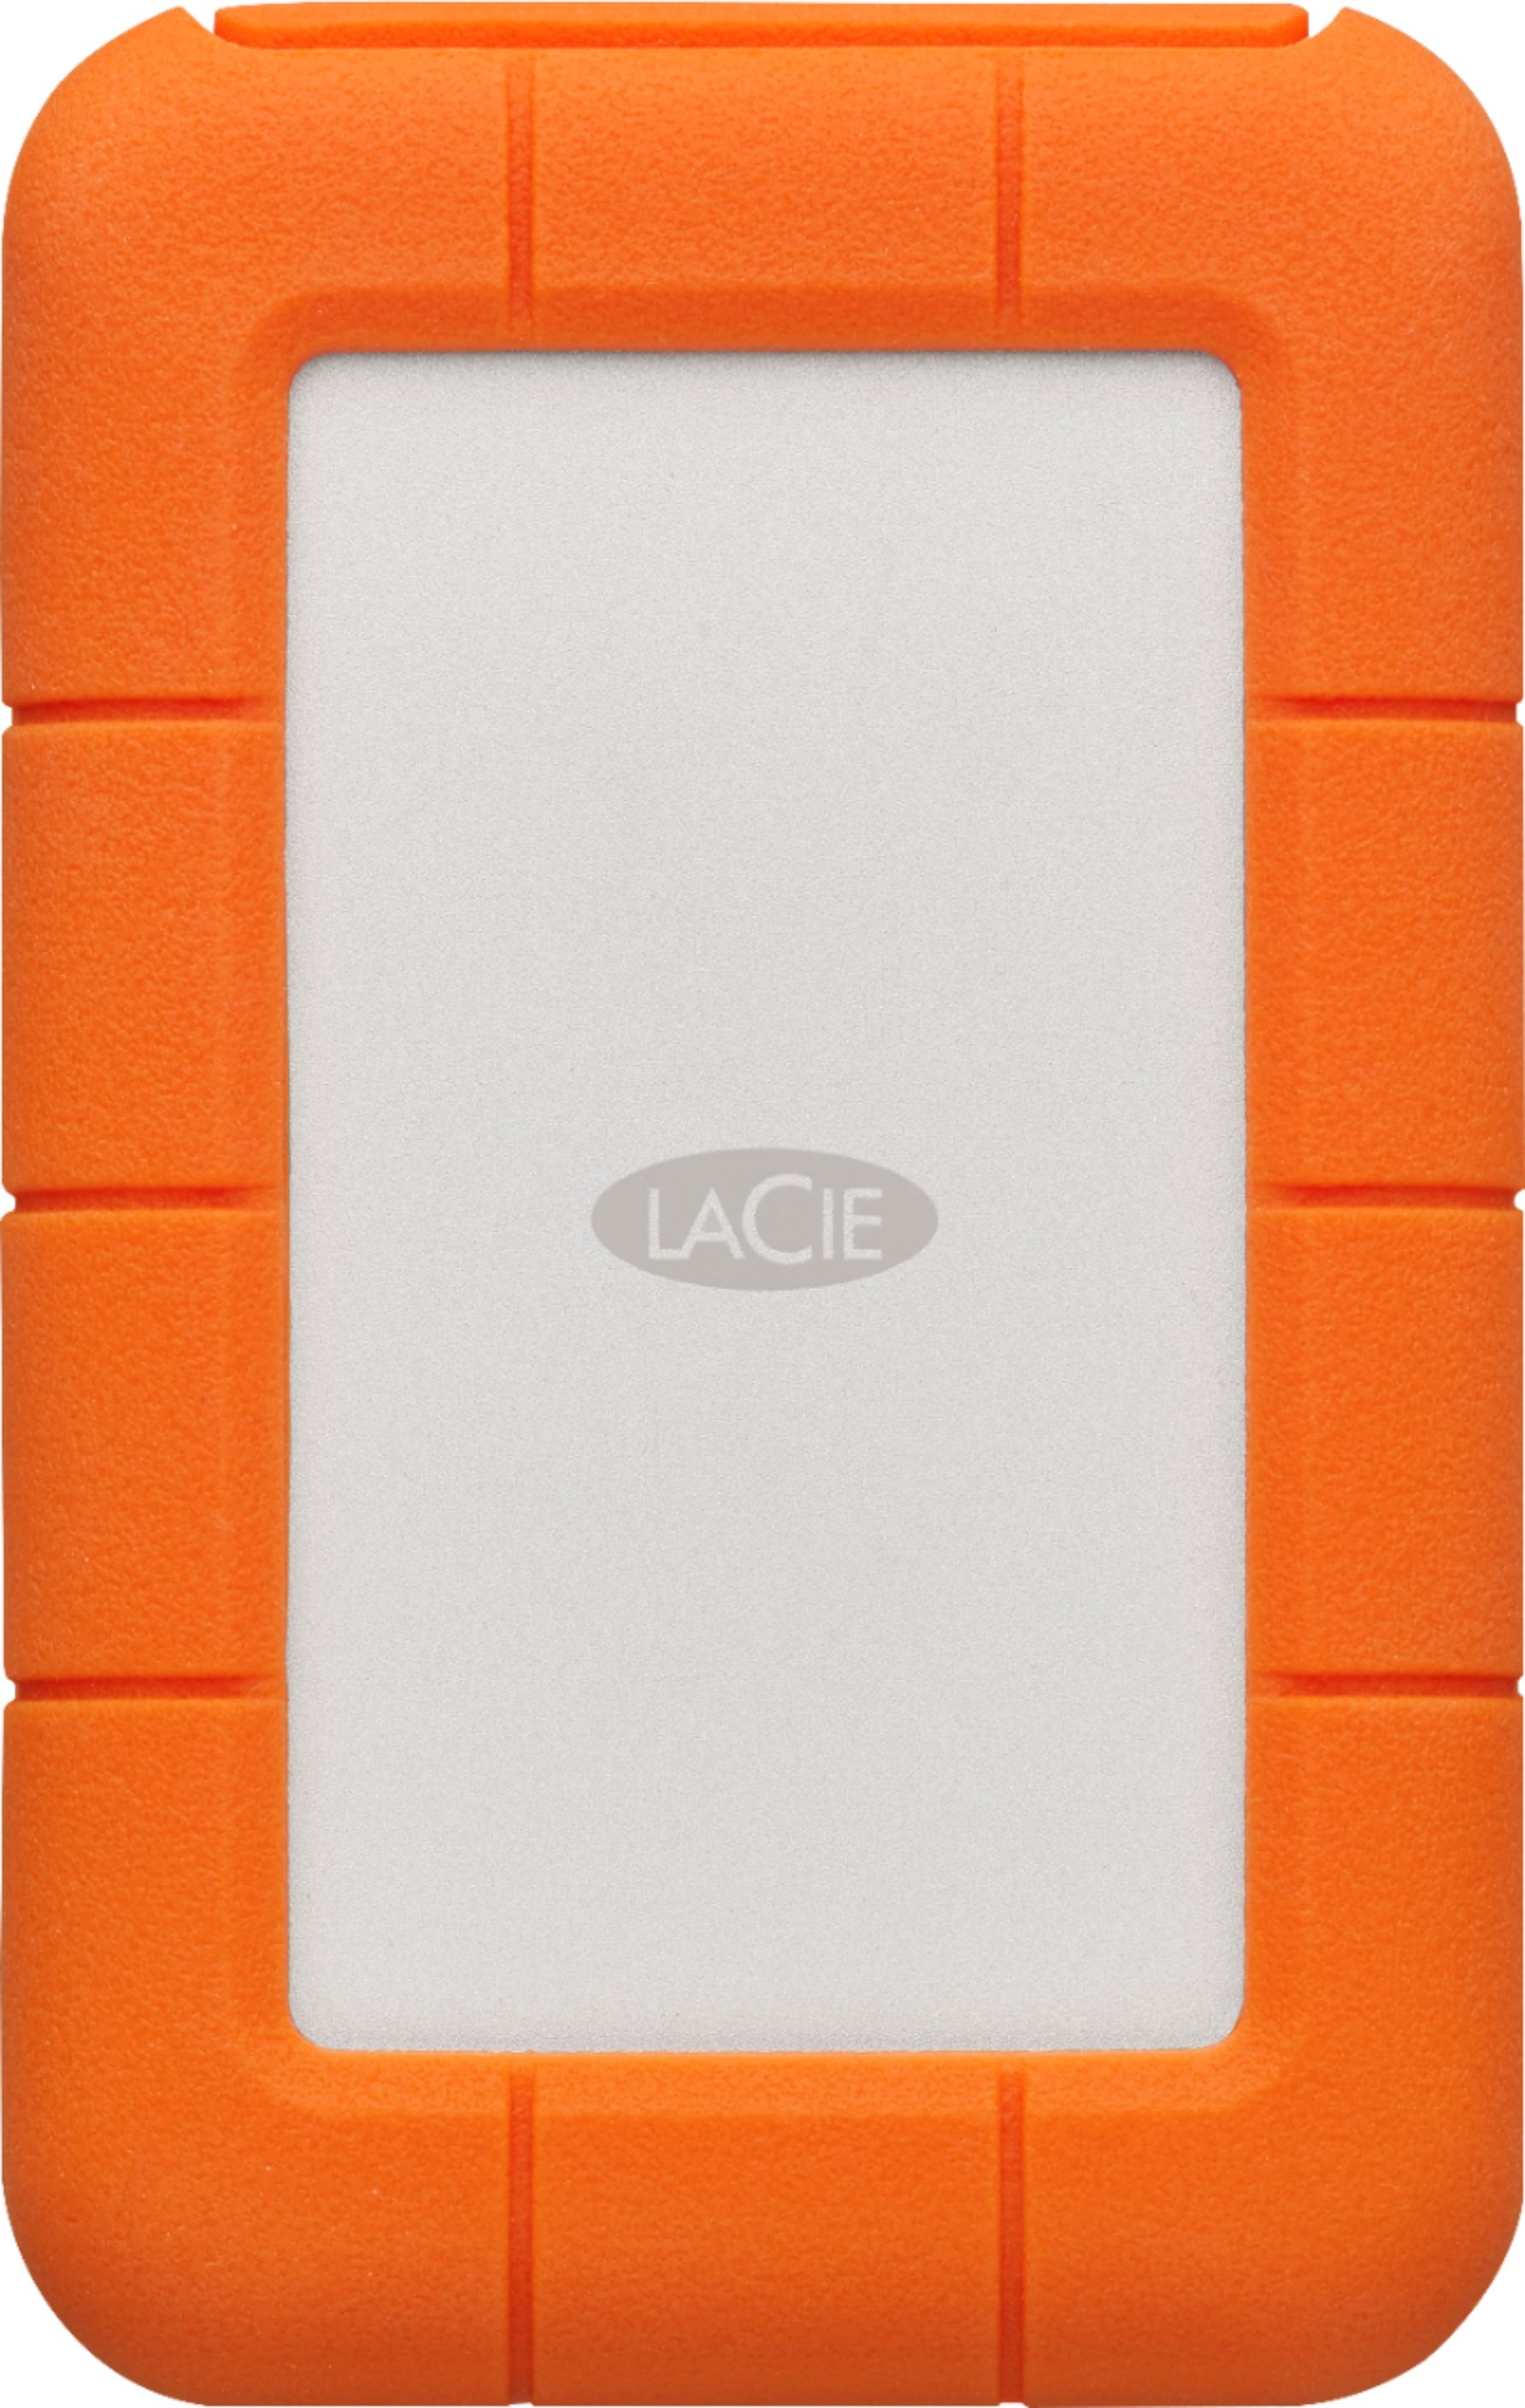 Best Buy Lacie Rugged 1tb External Usb 3 0 Thunderbolt Portable Hard Drive Orange Silver 9000294